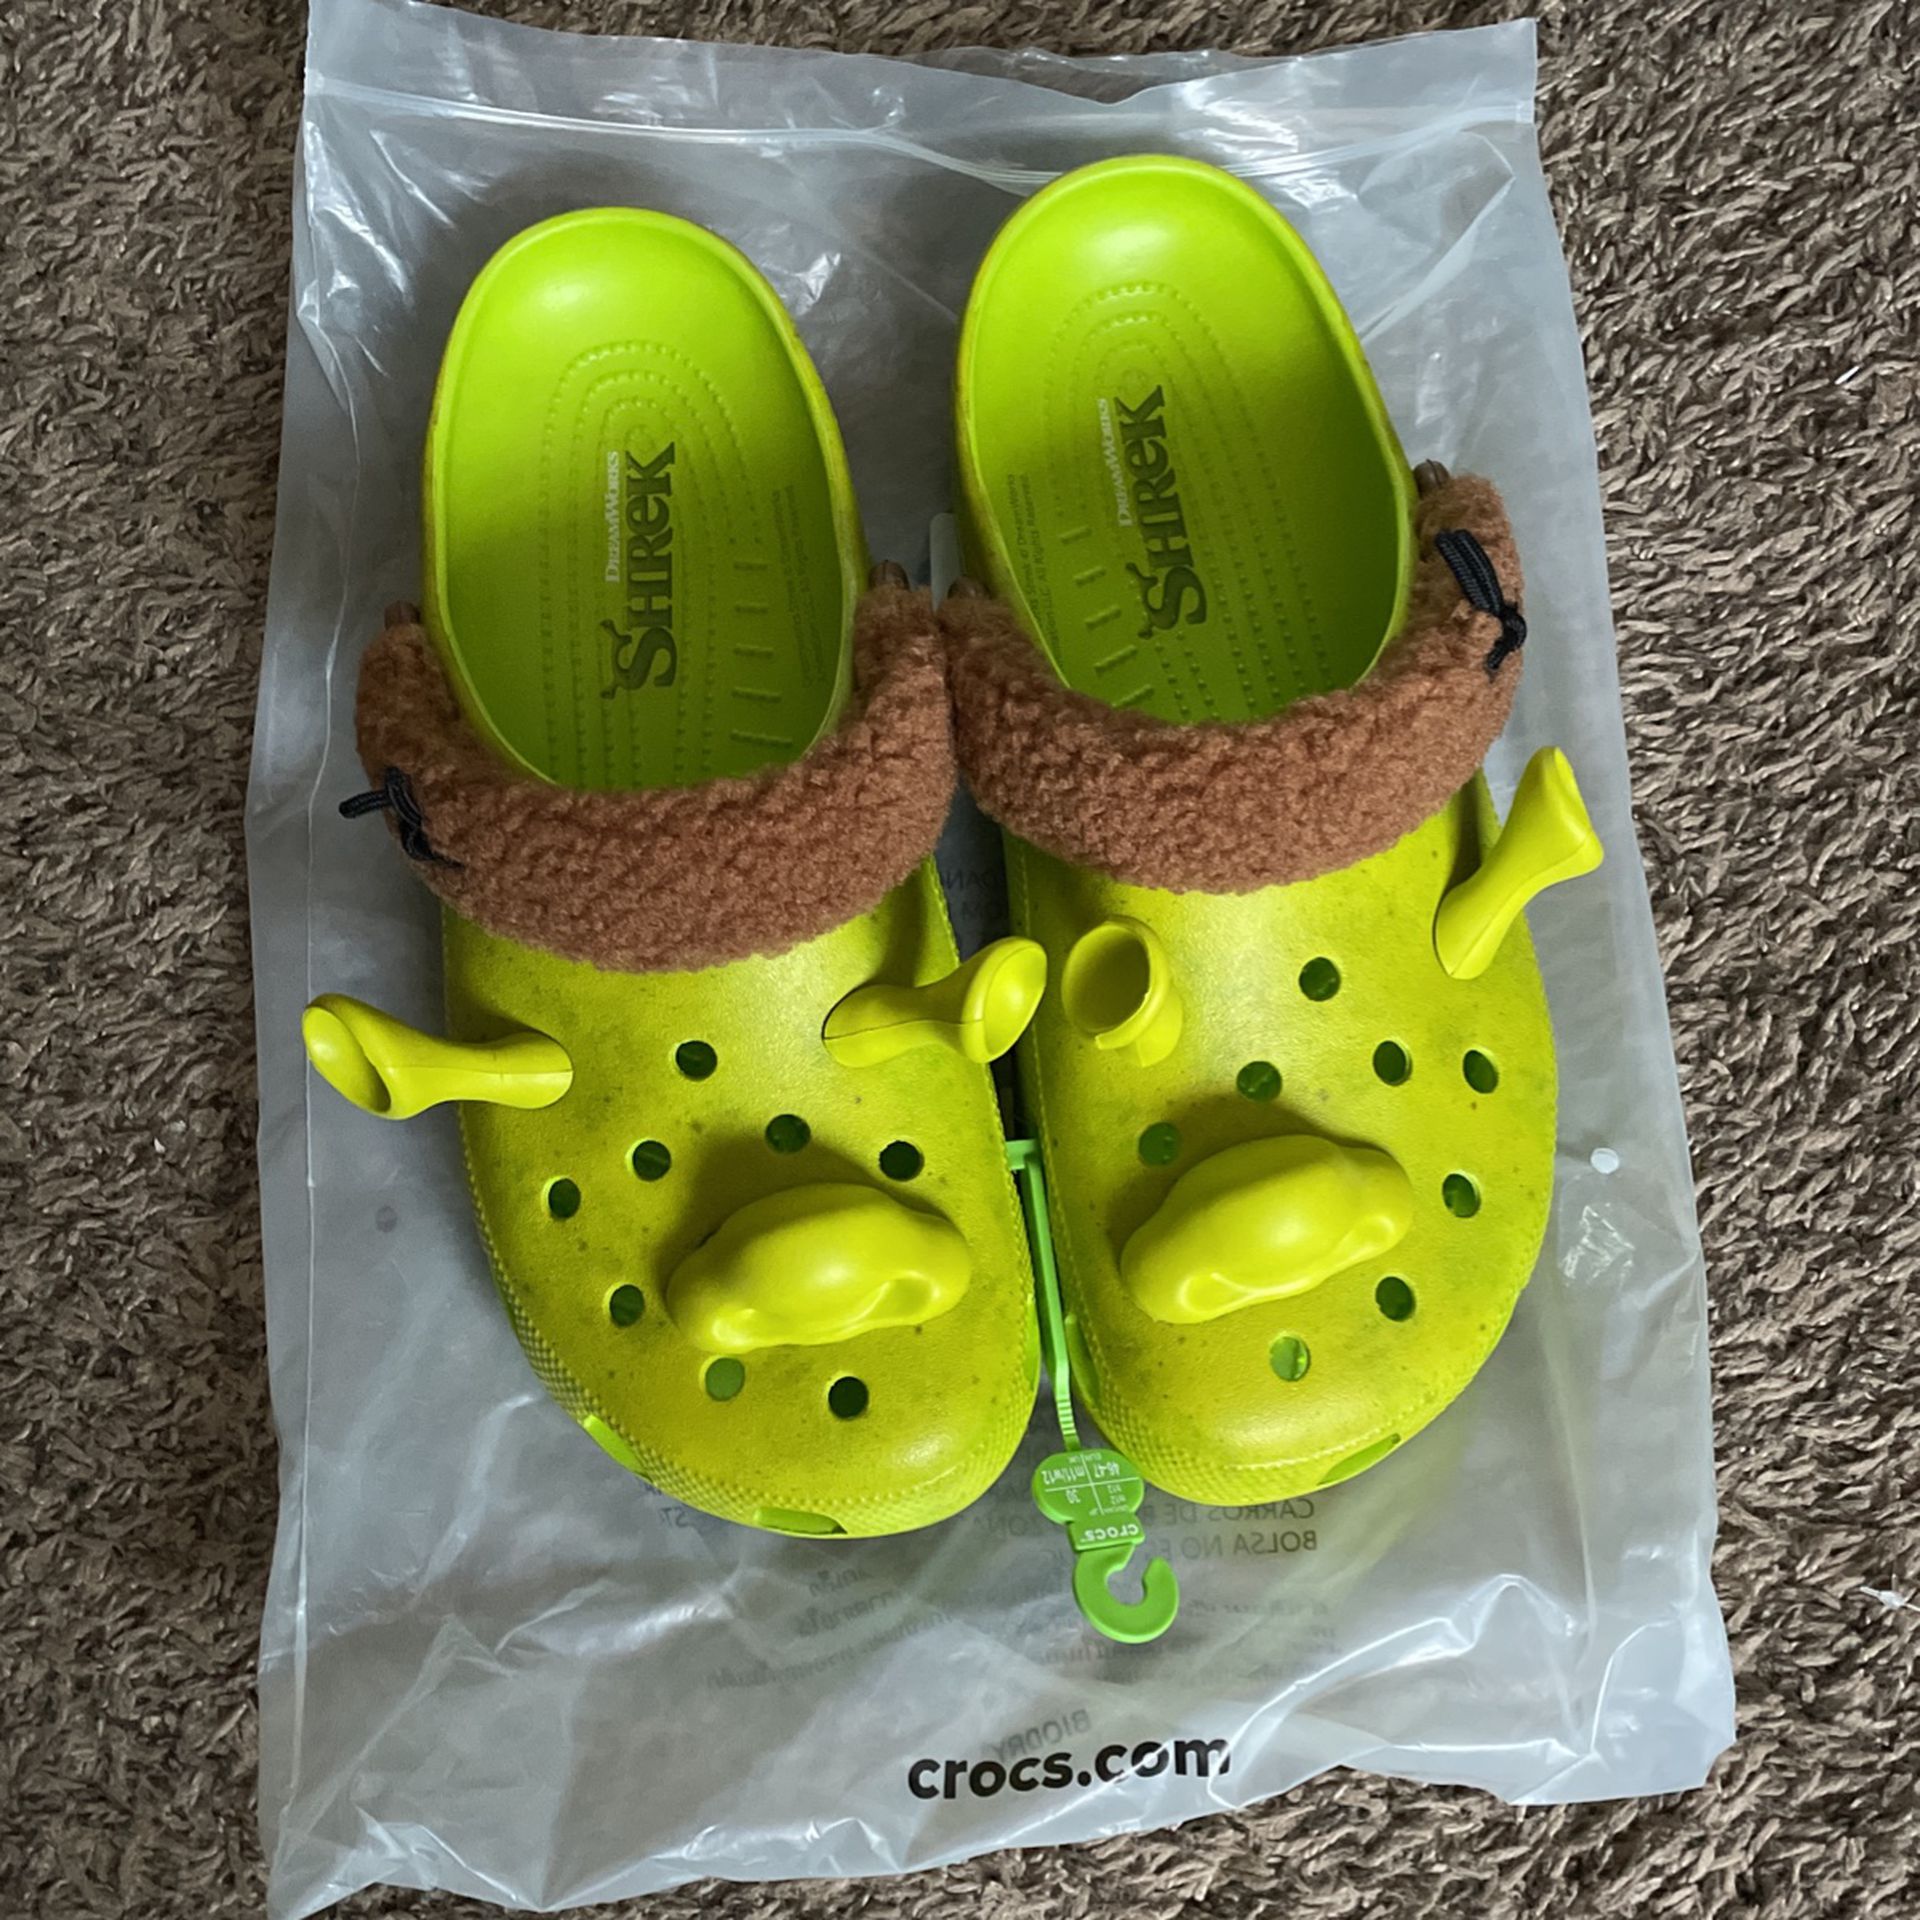 Shrek Crocs In Size 12